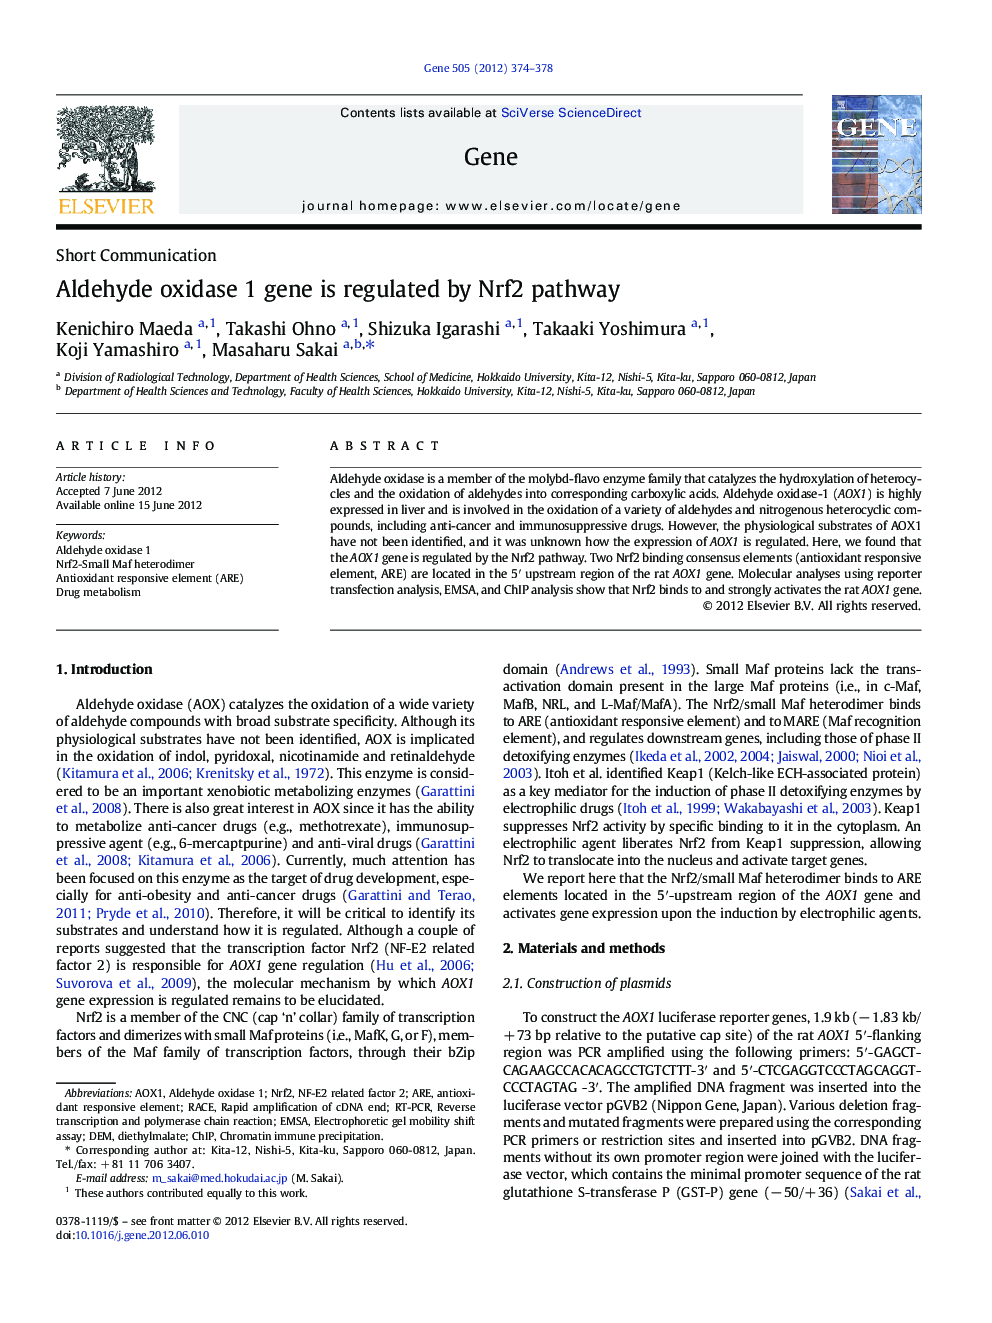 Aldehyde oxidase 1 gene is regulated by Nrf2 pathway